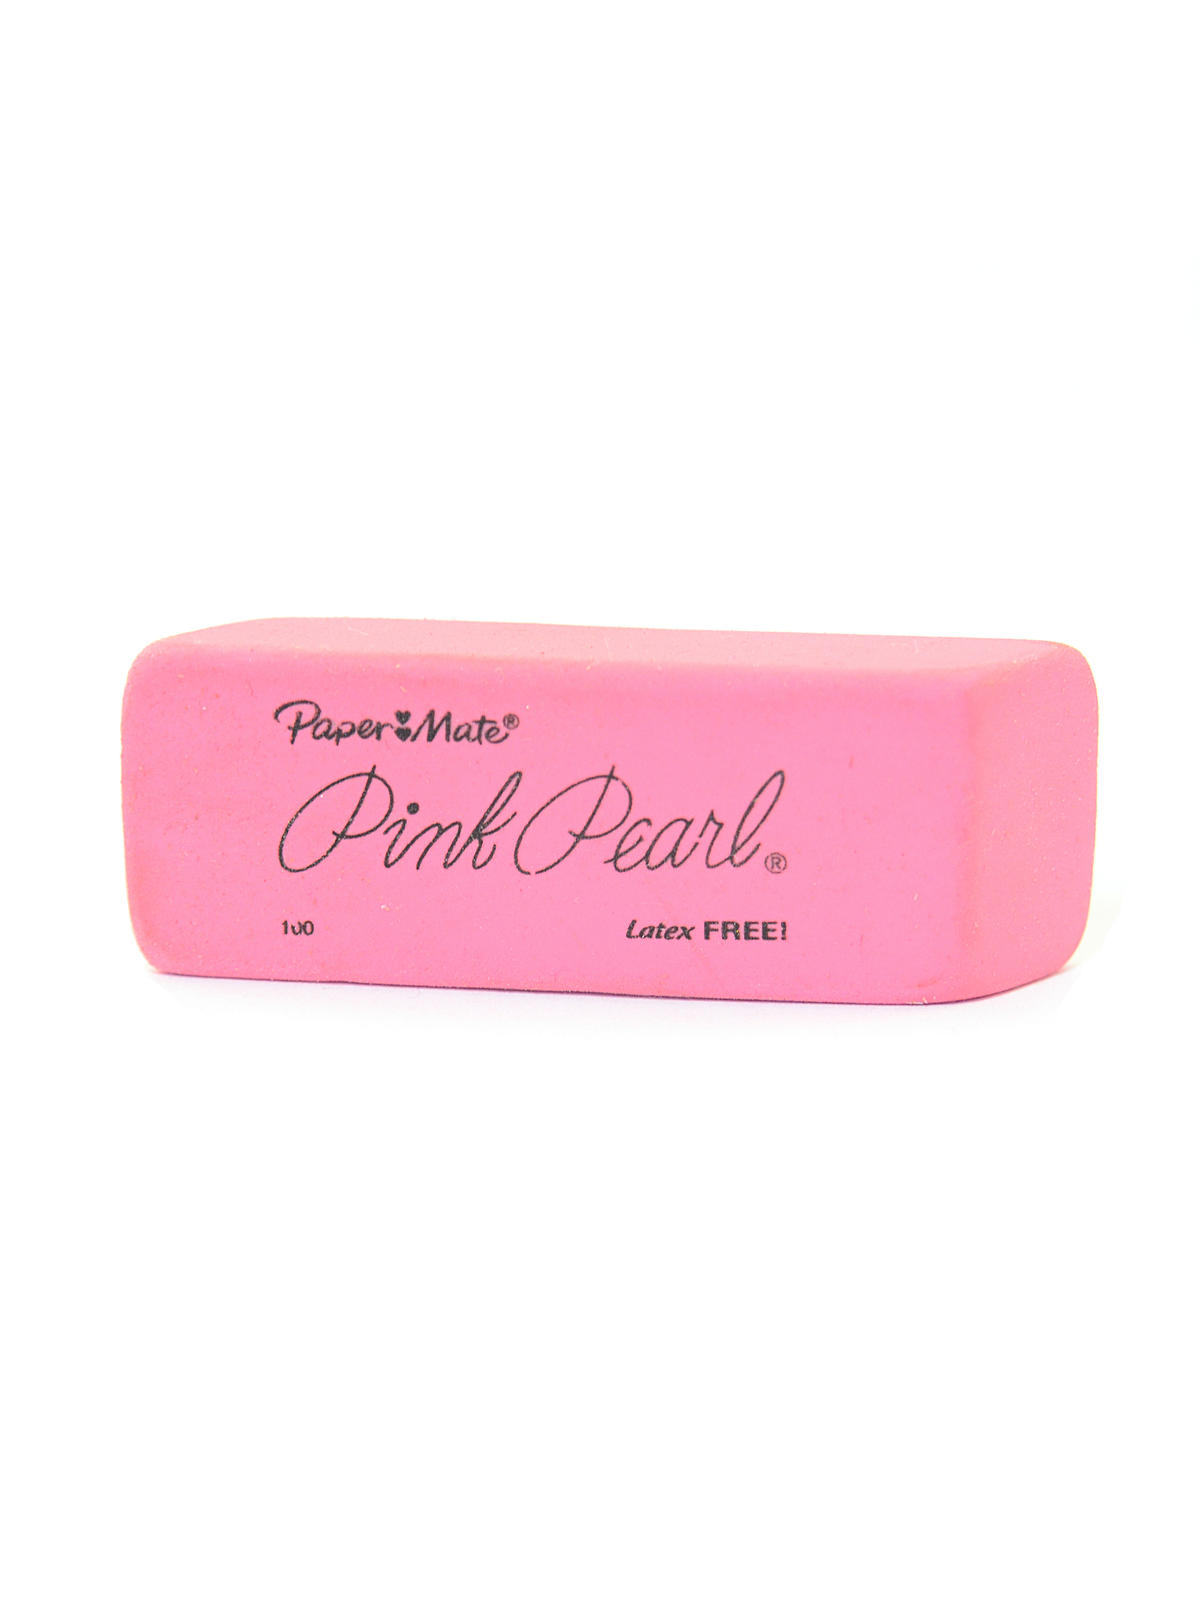 Pink pearl erasers.